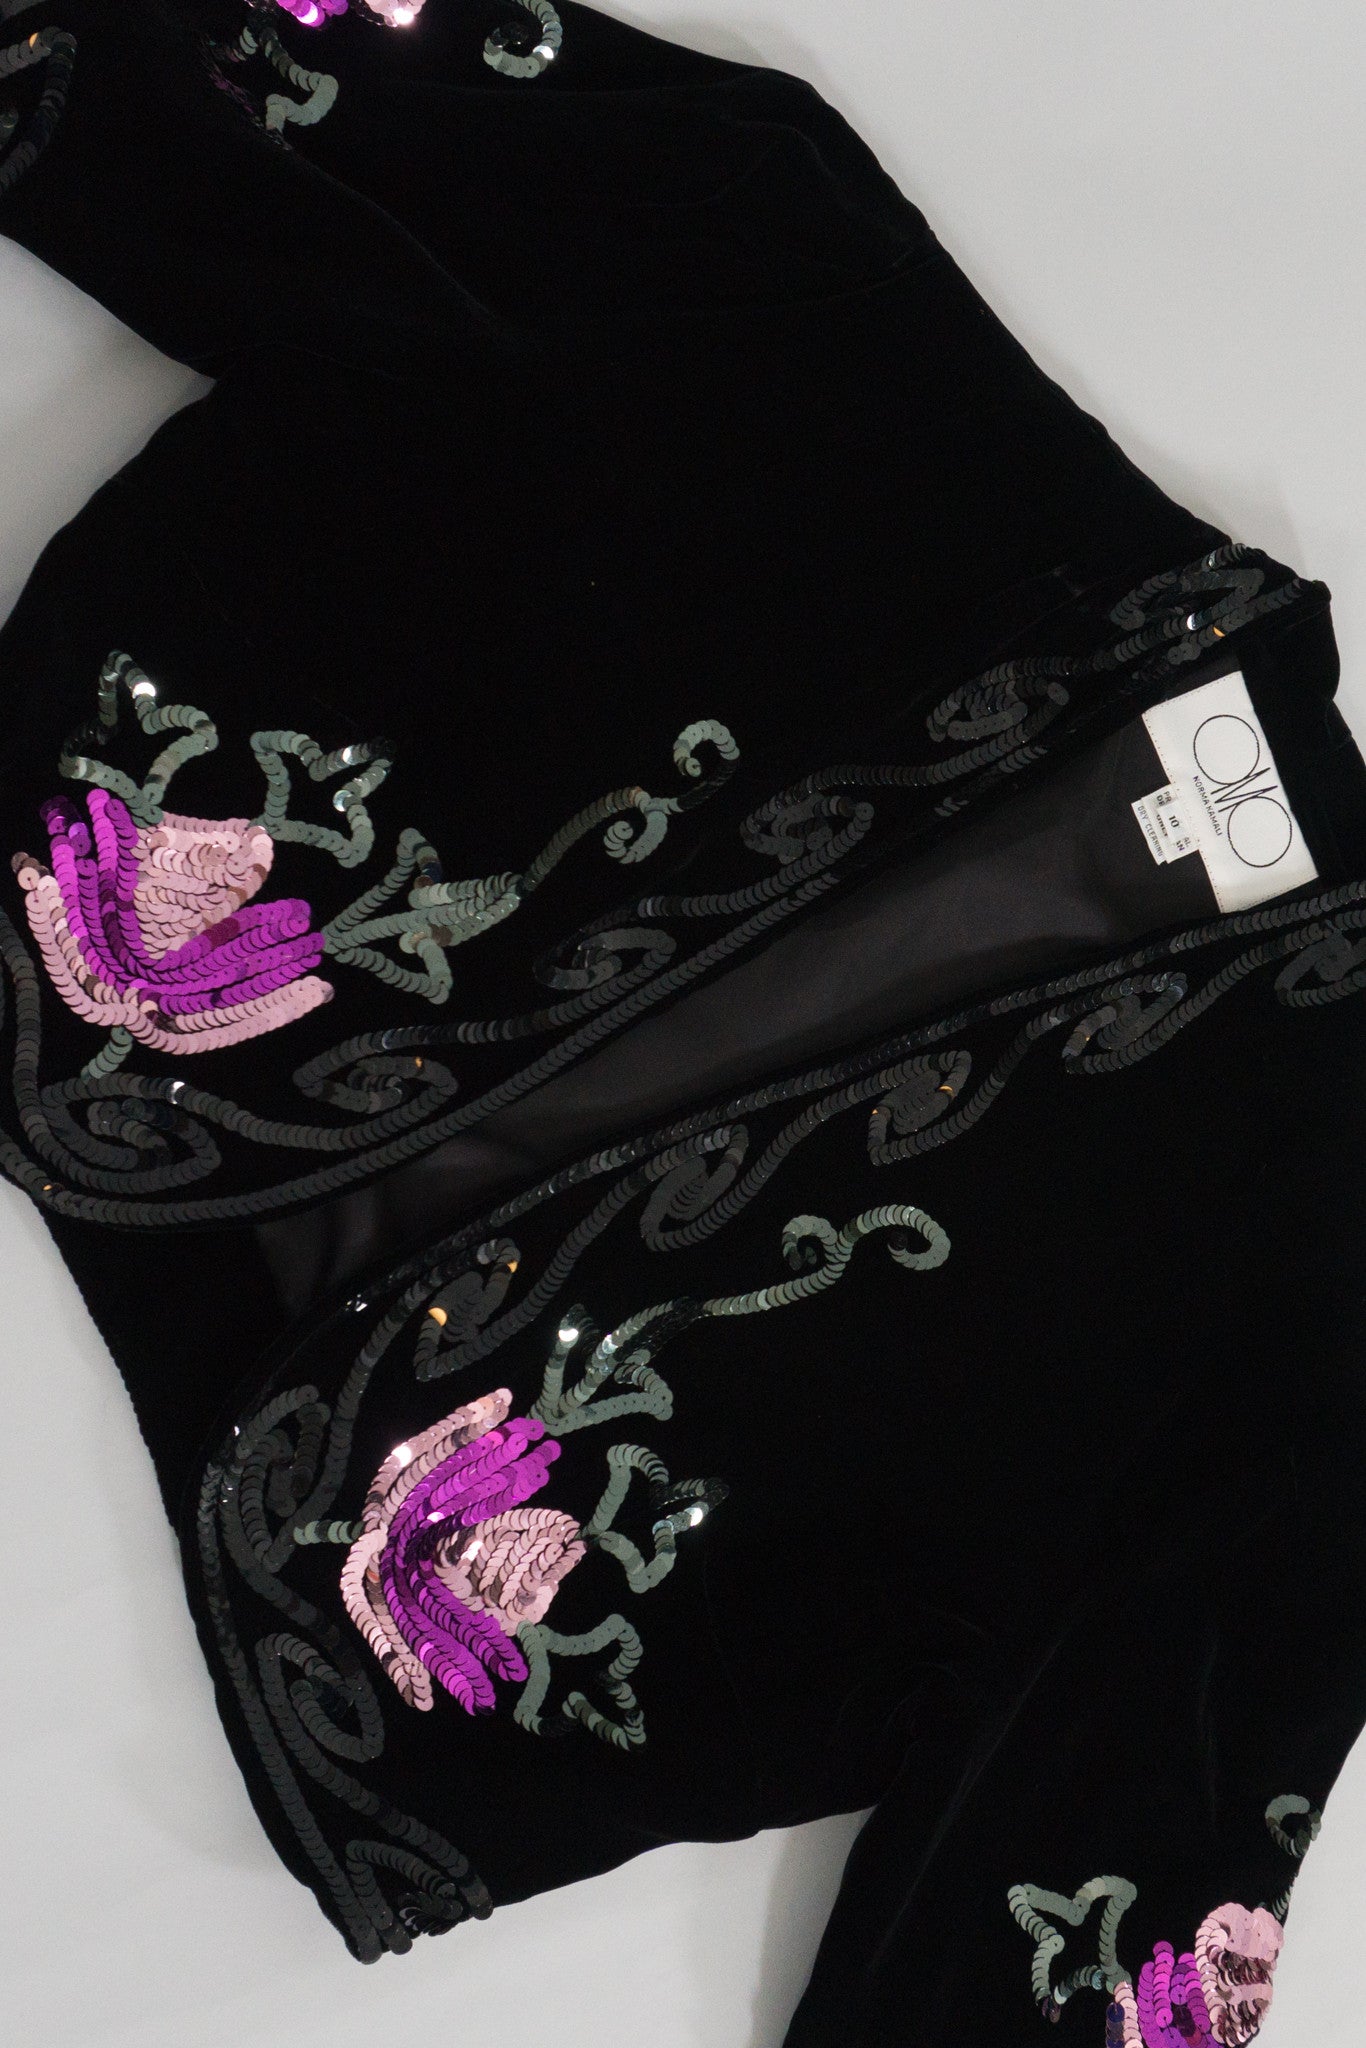 OMO Norma Kamali Vintage Velvet Sequined Bolero Crop Jacket